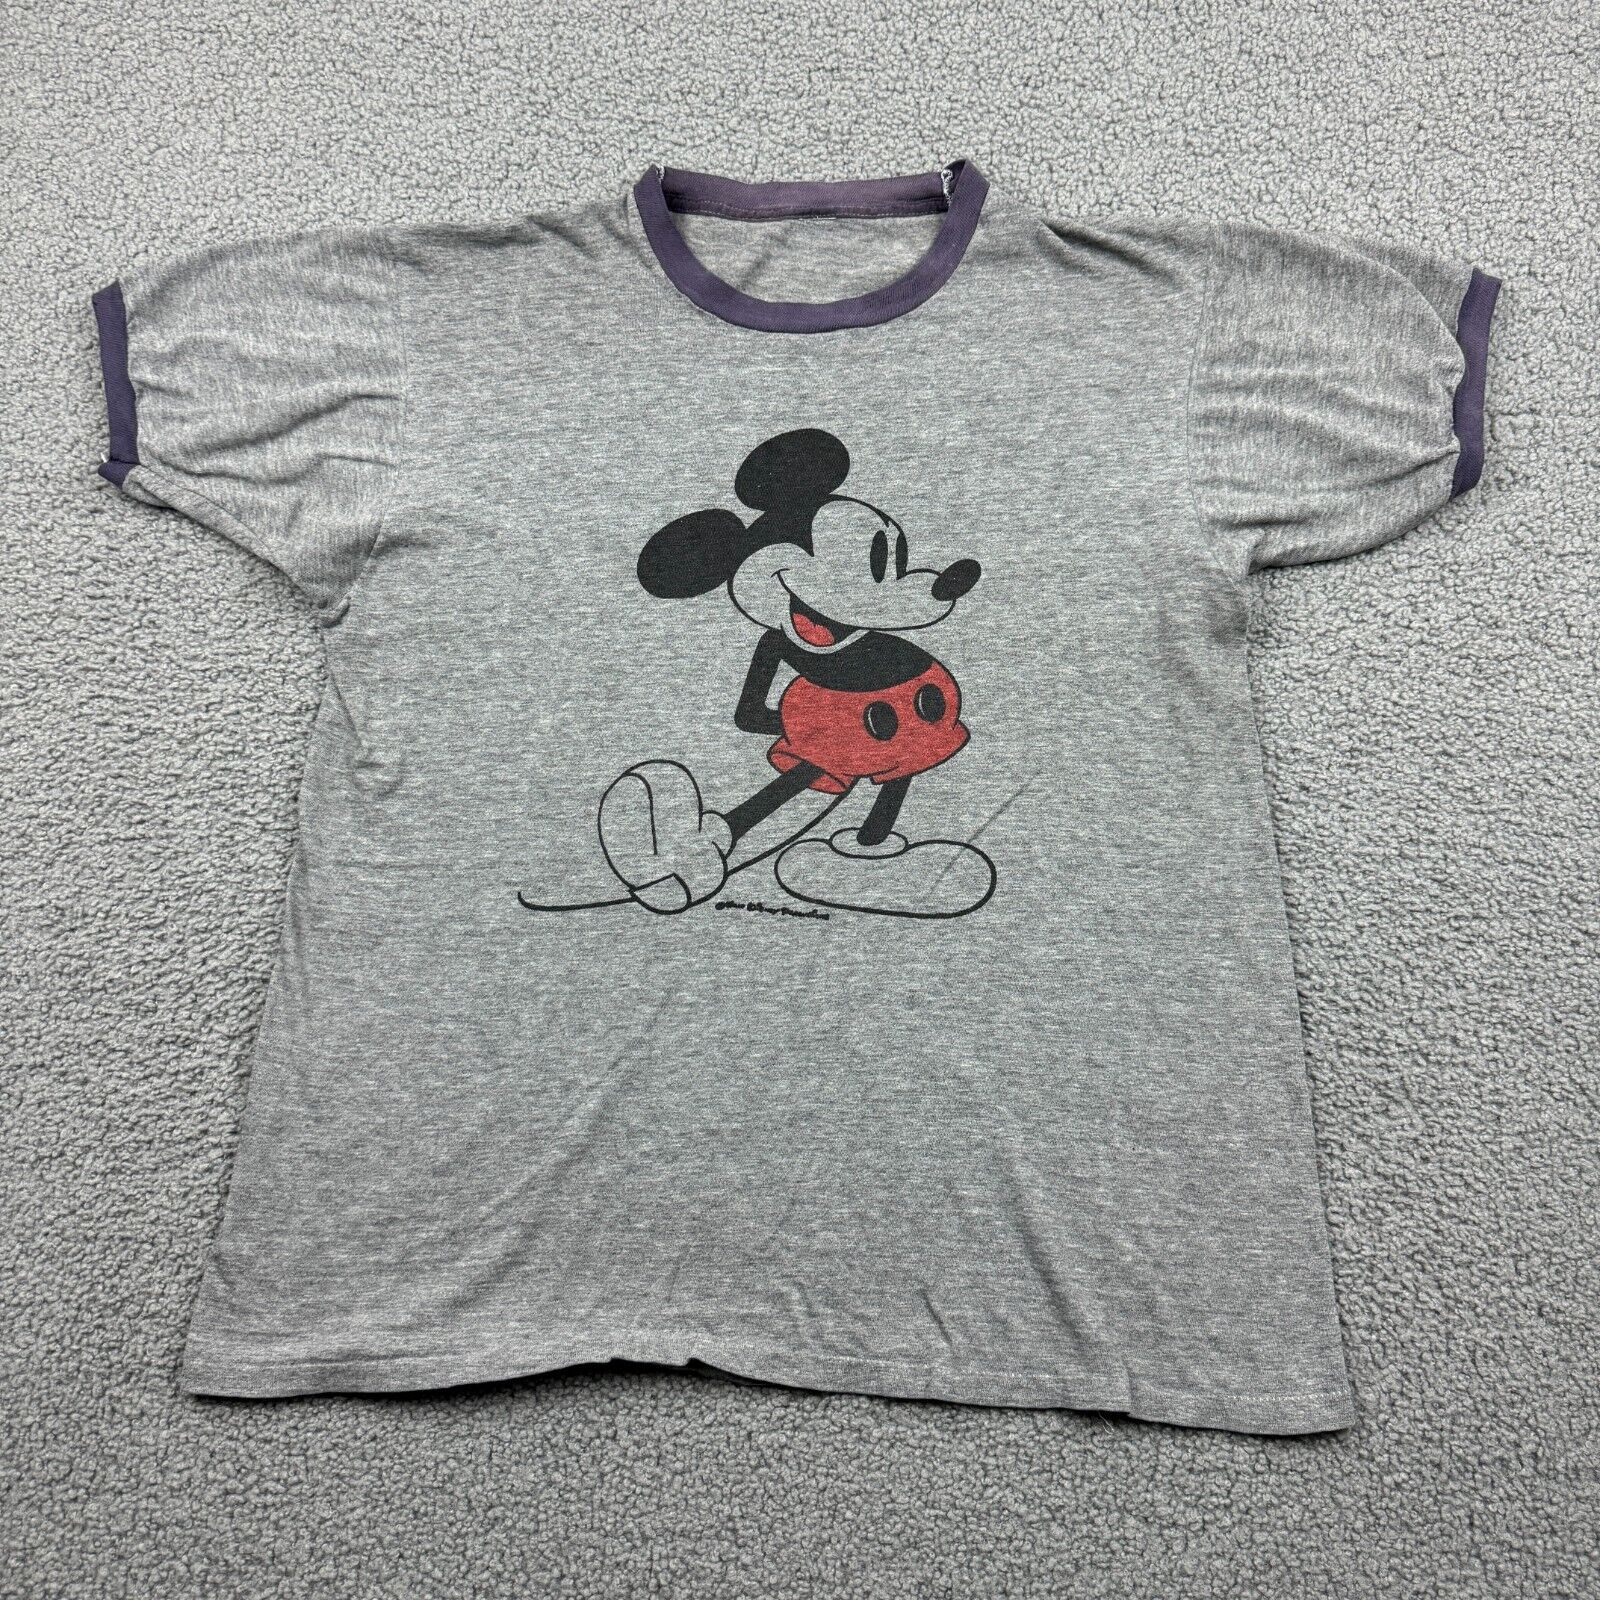 Vintage Walt Disney Shirt Adult Small Gray Mickey Mouse Crew Neck Tee T-Shirt